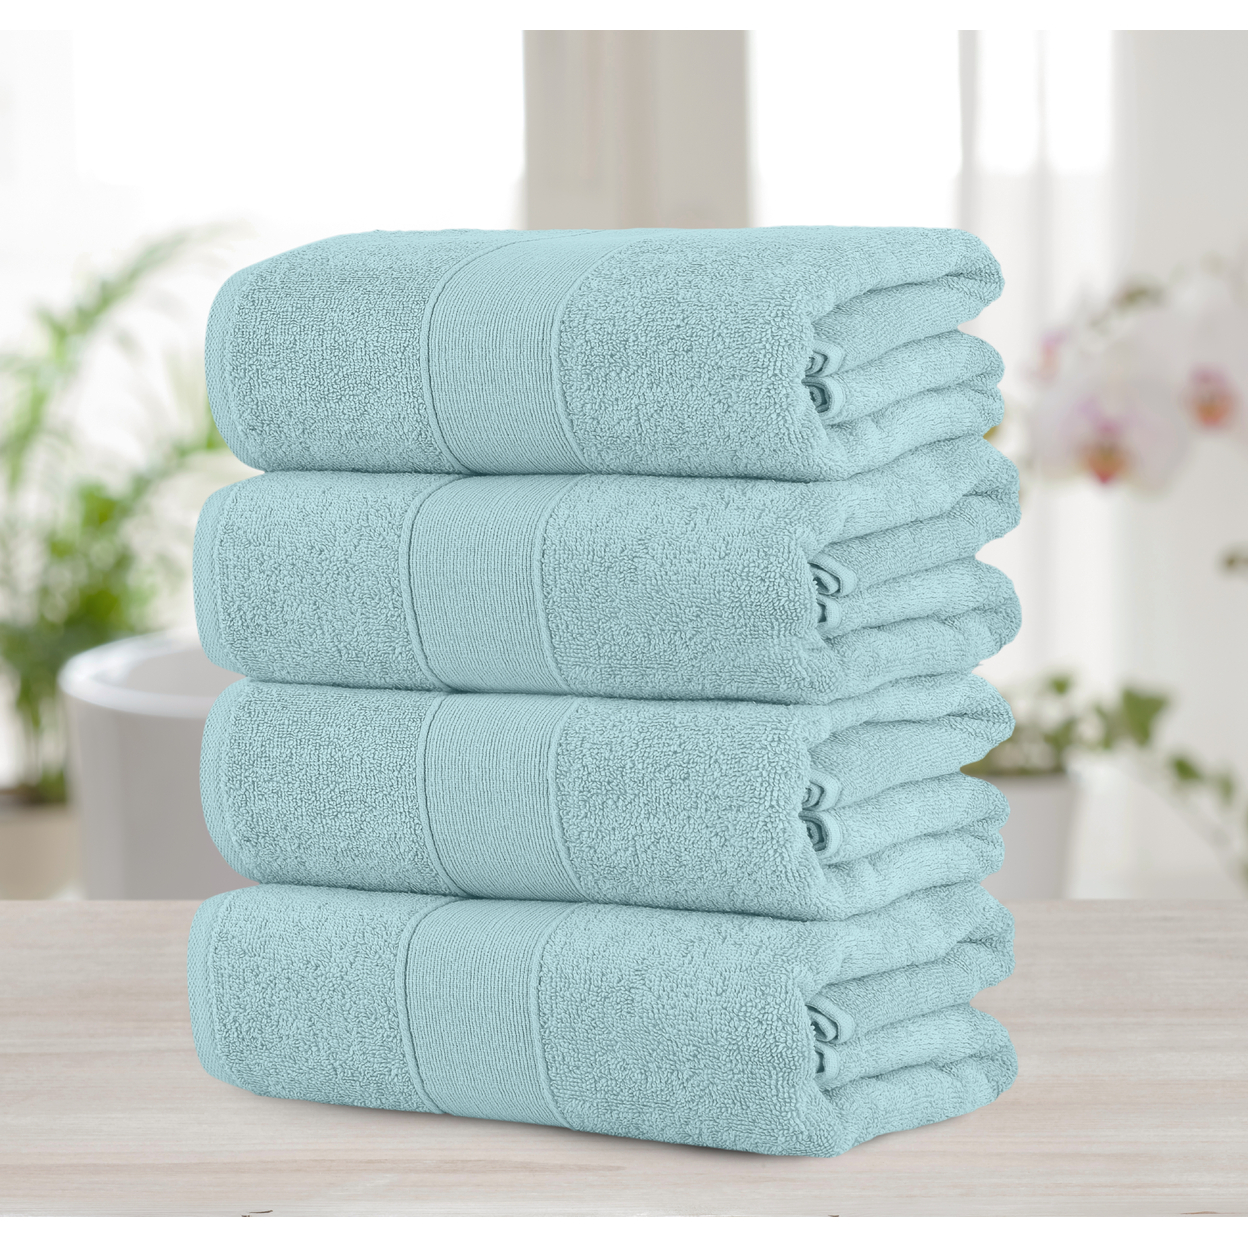 Chic Home Luxurious 4-Piece 100% Pure Turkish Cotton Bath Towels, 30 X 54, Dobby Border Design, OEKO-TEX Certified Set - Blue